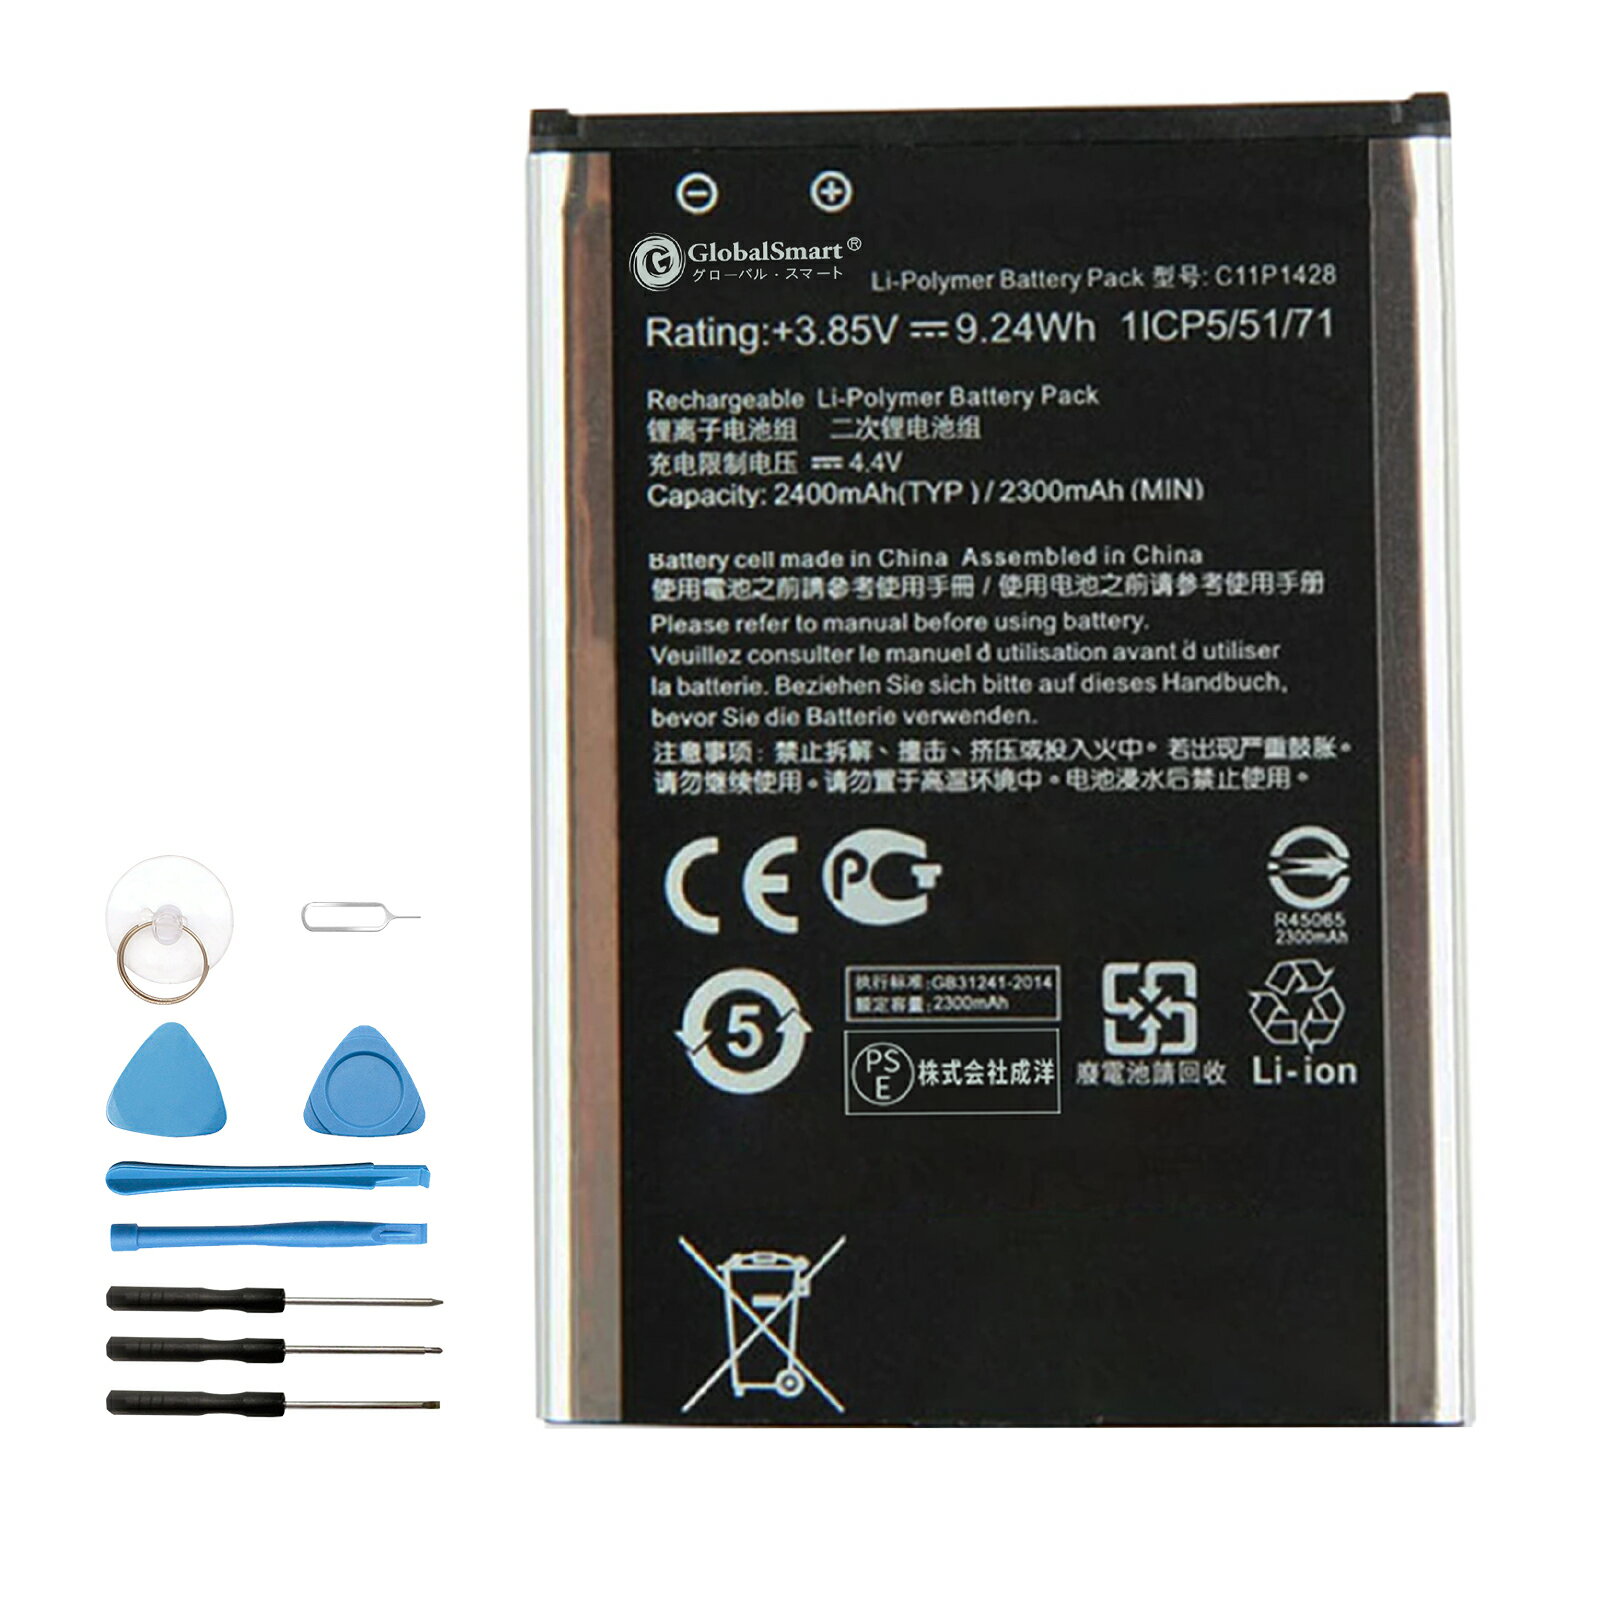 G GLOBALSMART B11P1428 互換電池 3.85V 2400mAh バッテリー 対応用 PSE認証済 取り付け工具セット 日本語説明書付き